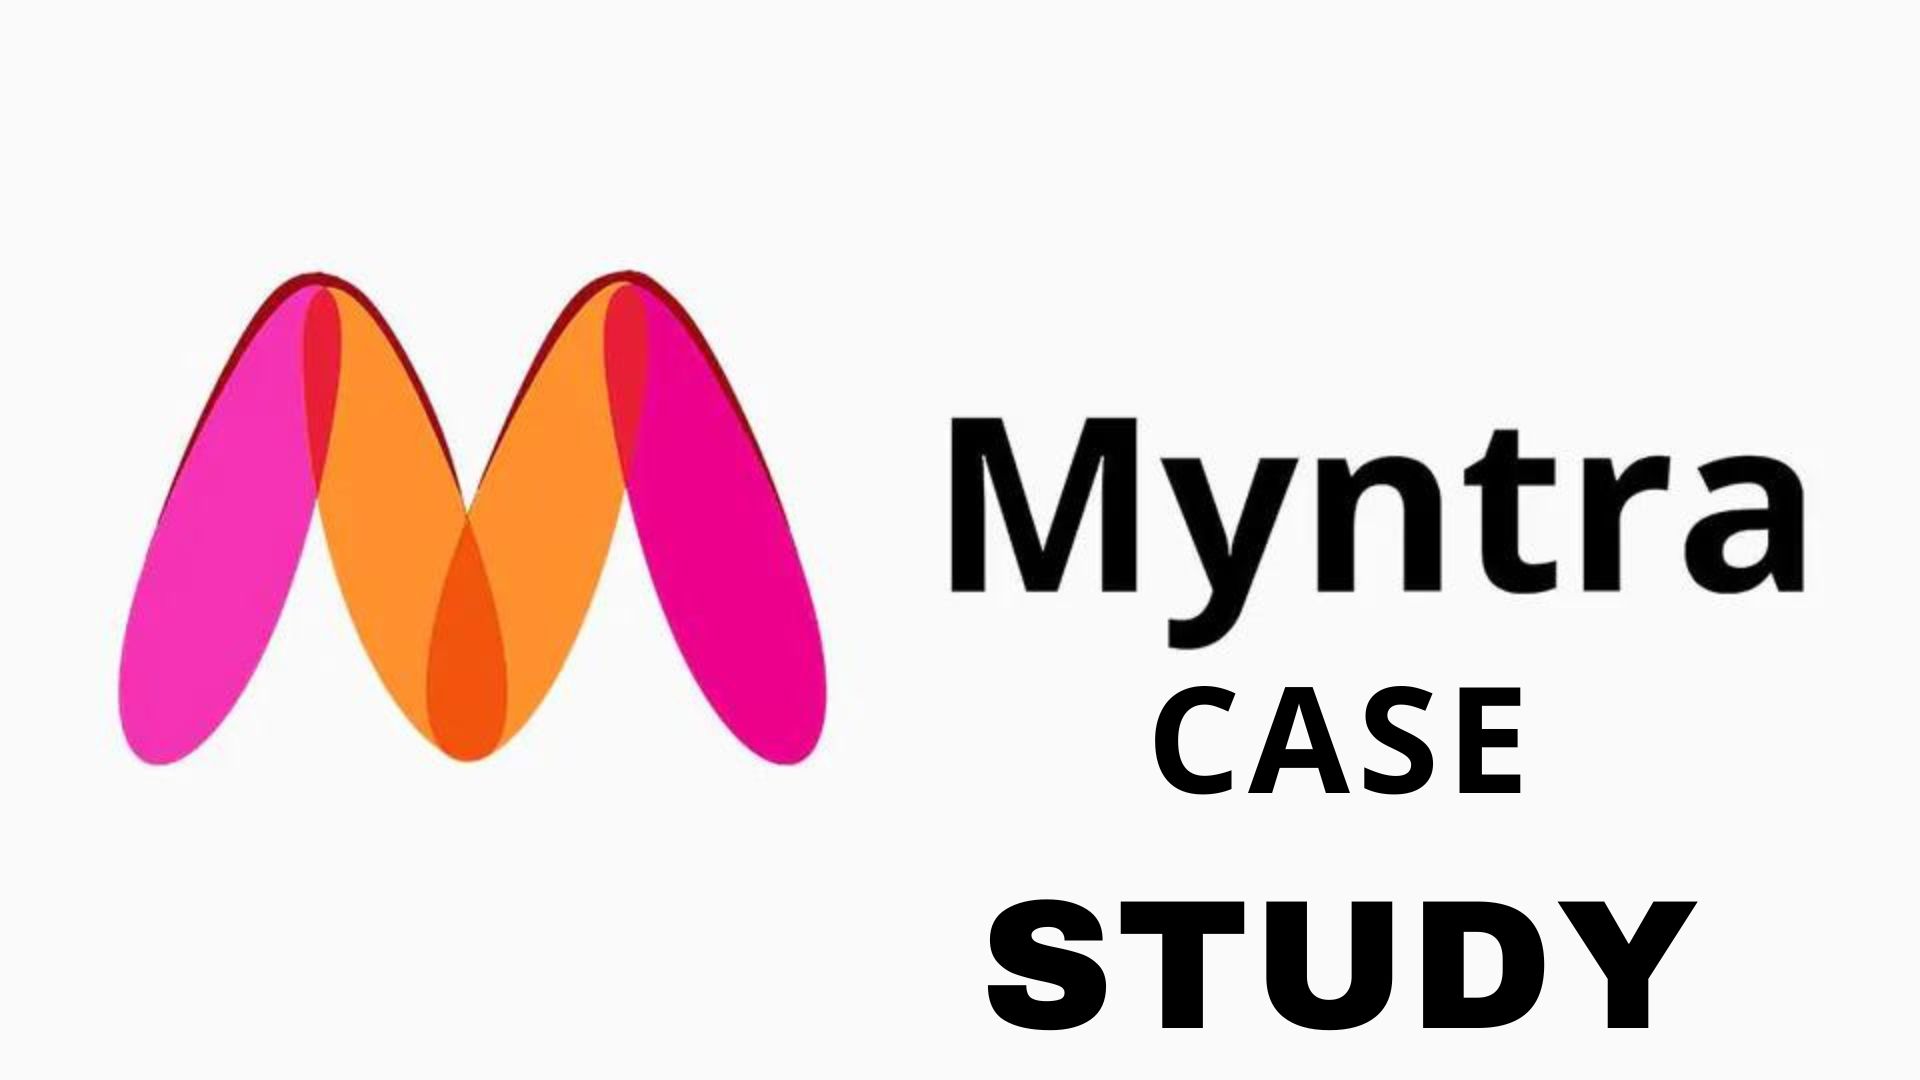 MYNTRA CASE STUDY